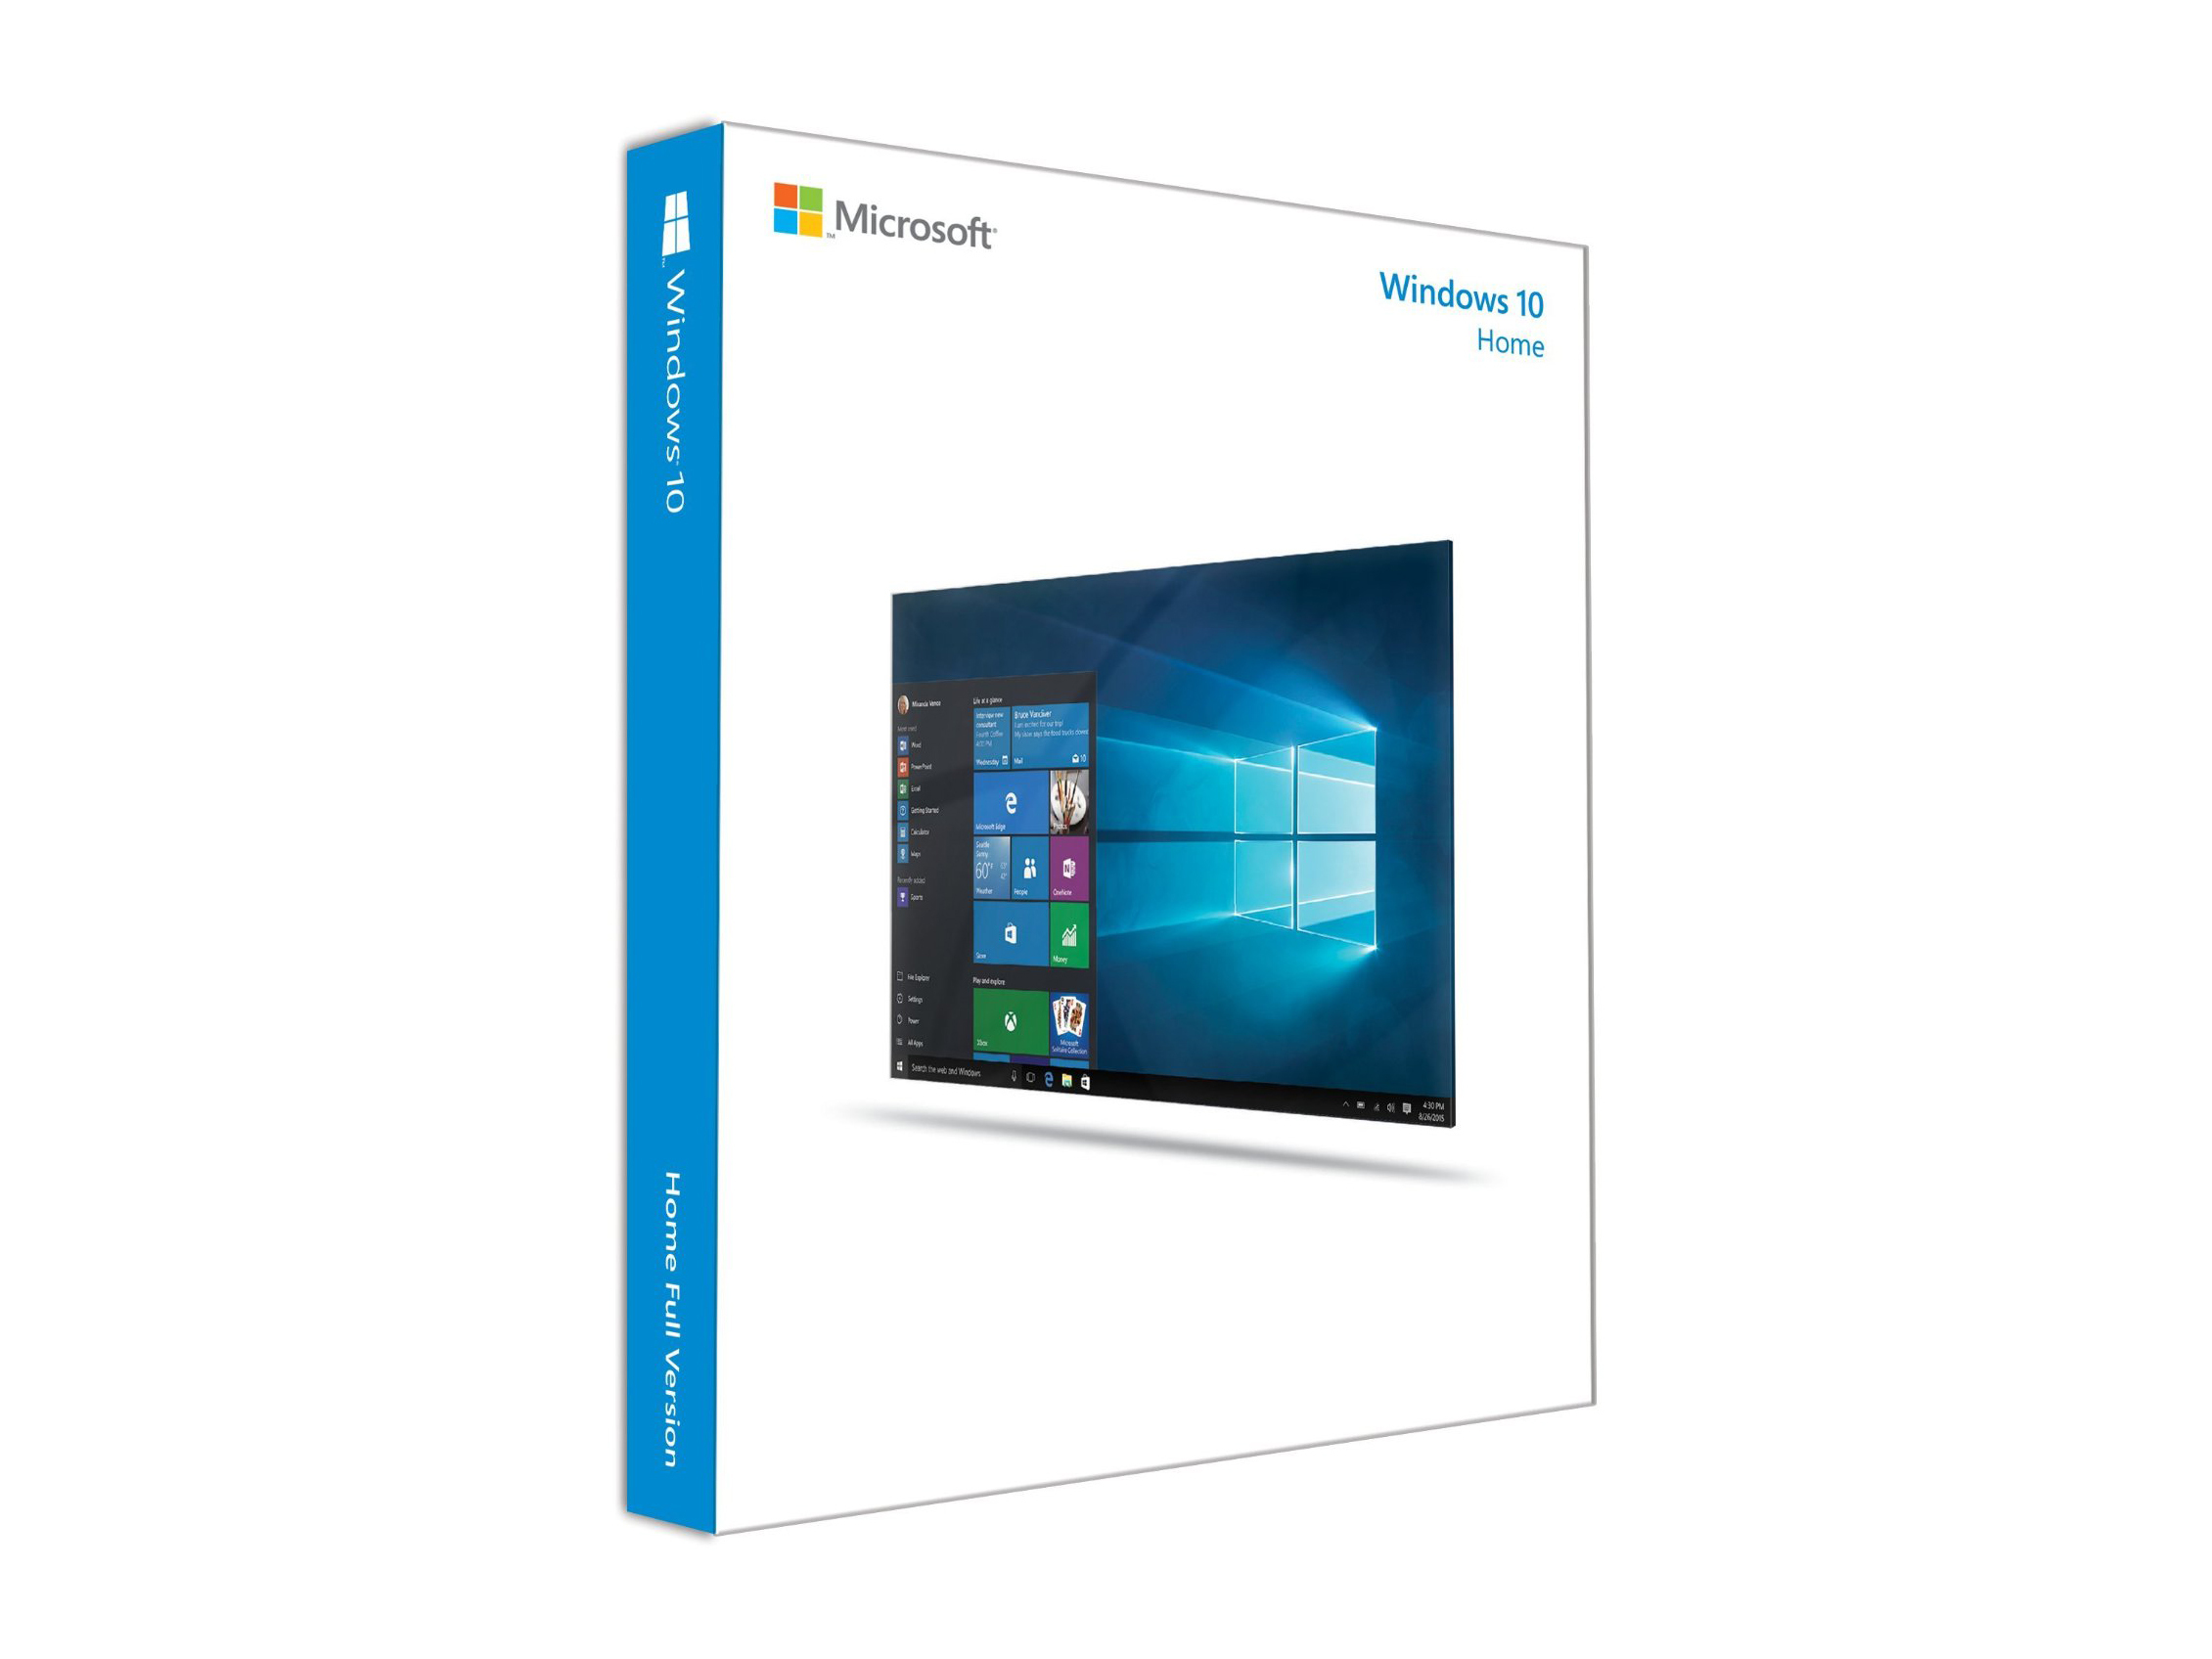 6) Smooth operator: Windows 8.1 or Windows 10